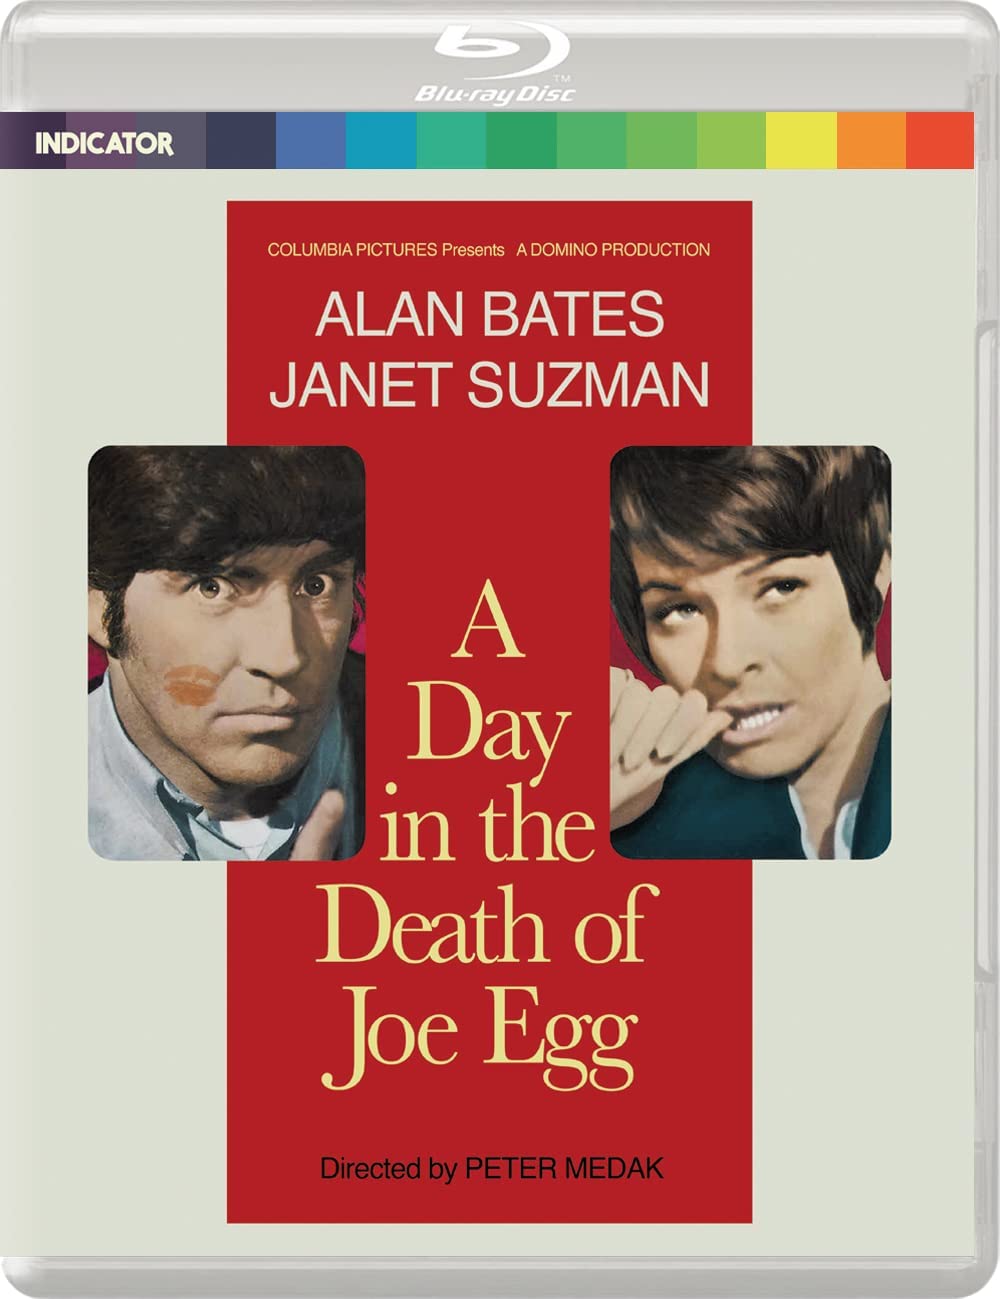 Ein Tag im Tod von Joe Egg (Standard Edition) [Region Free] [Blu-ray]